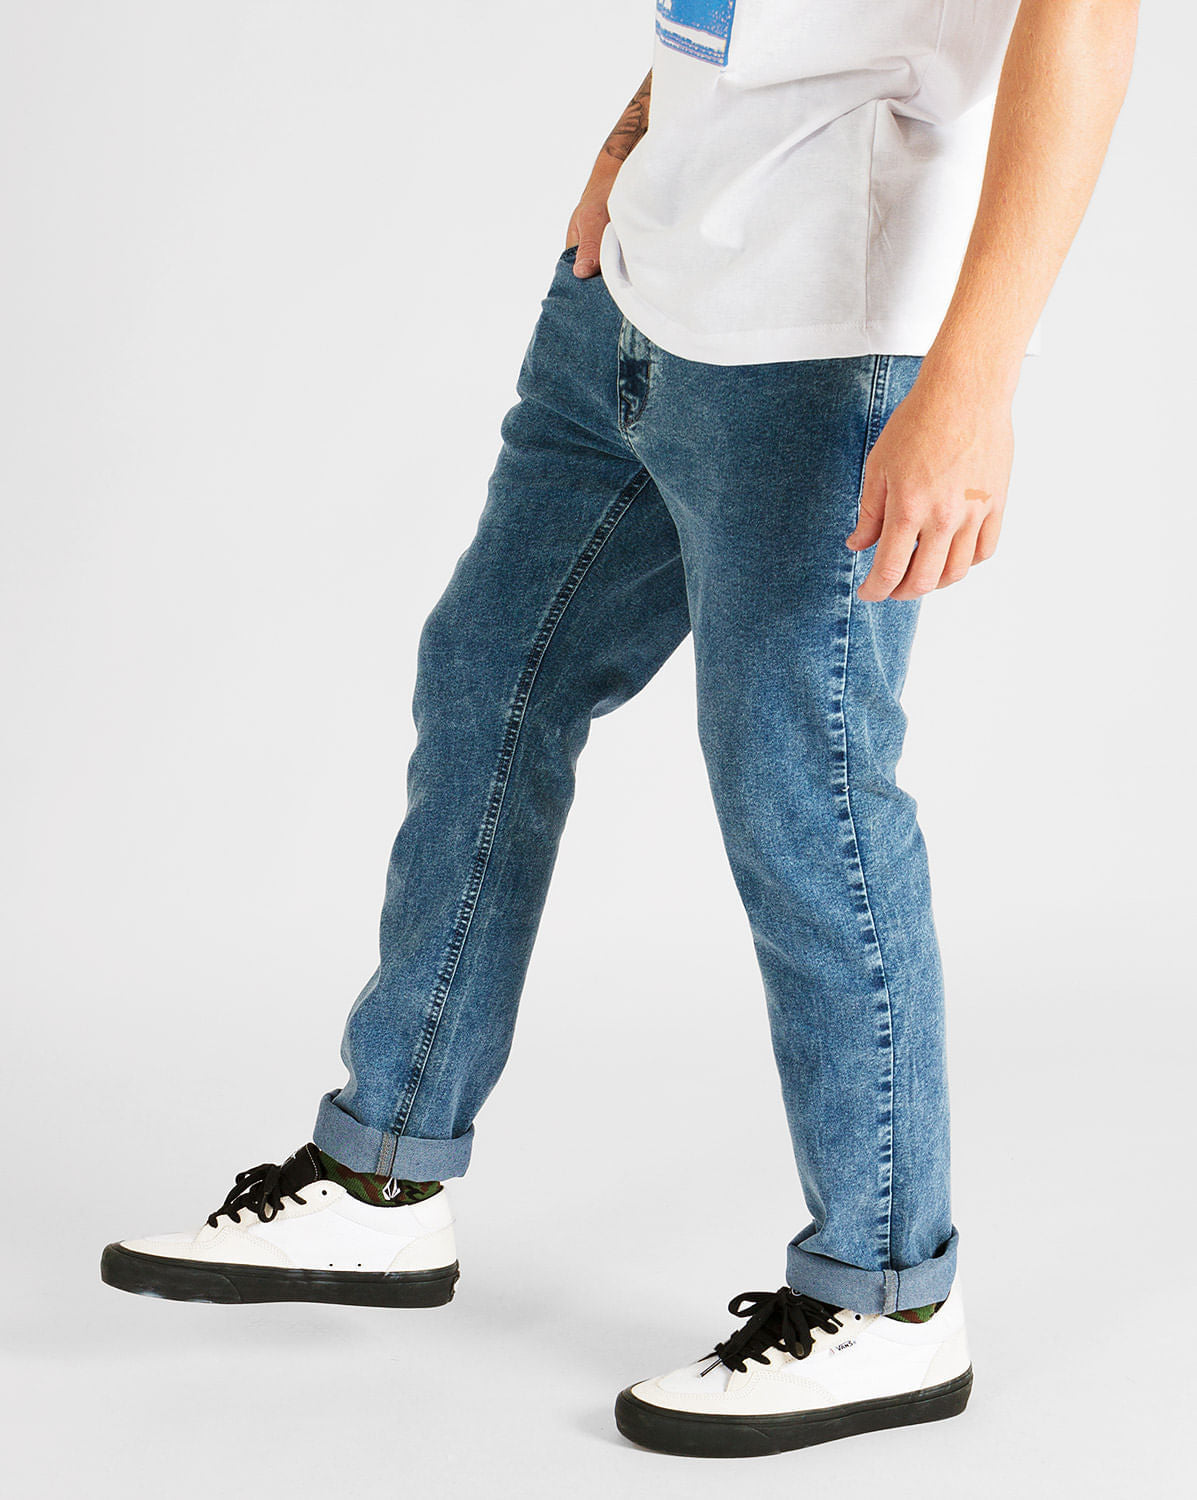 Calça Jeans Volcom Skinny Fit Blue 2x4 Denim – Volcom Brasil - Loja Oficial